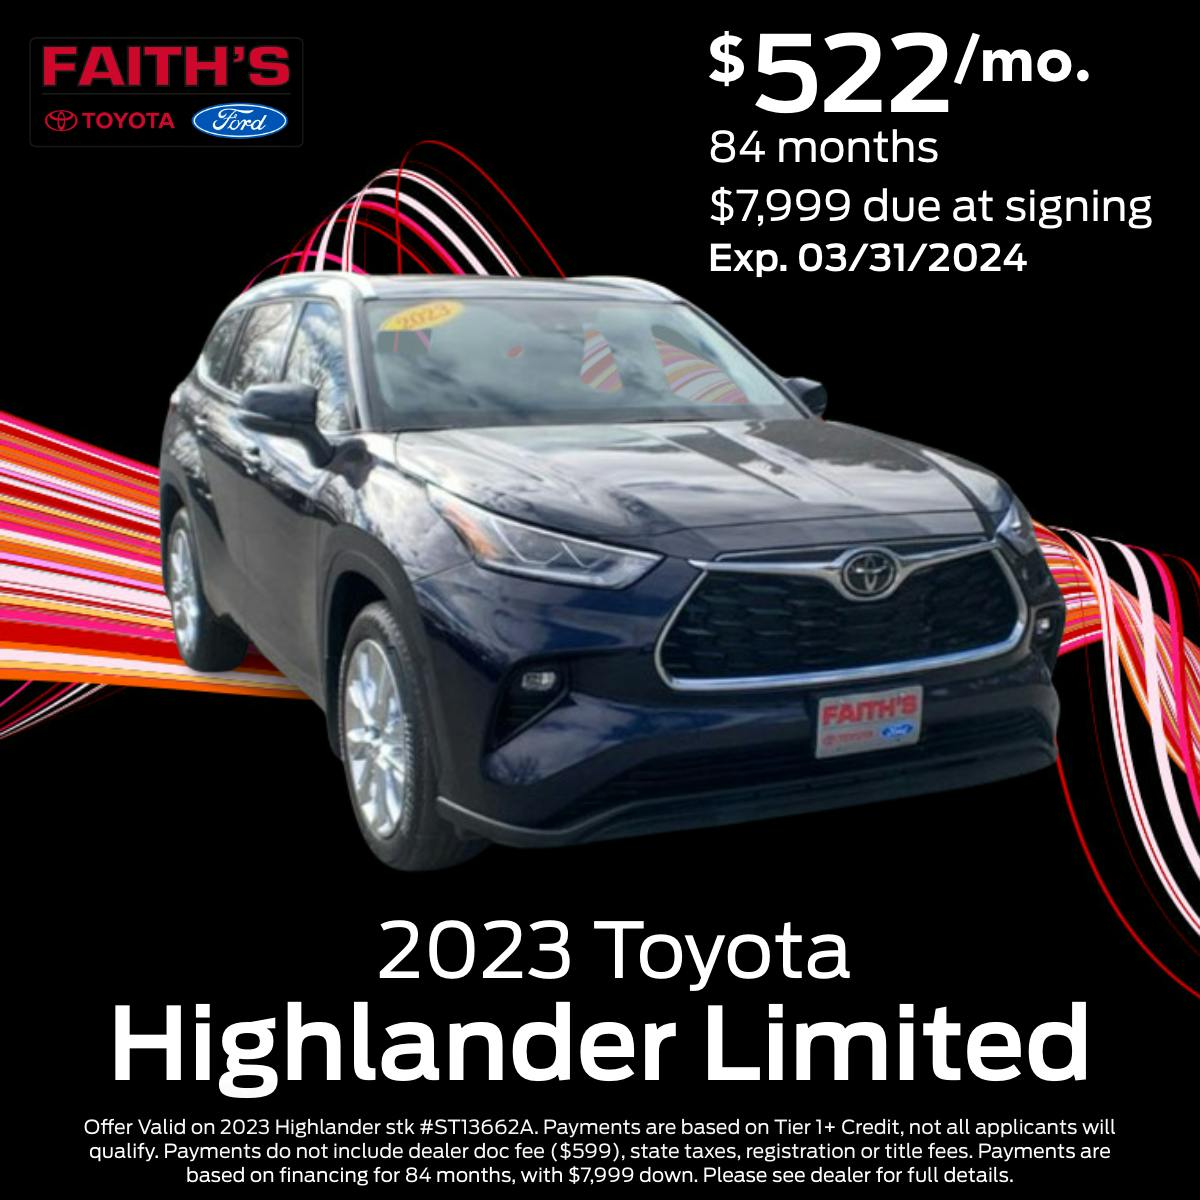 2023 Toyota Highlander Purchase Offer | Faiths Ford